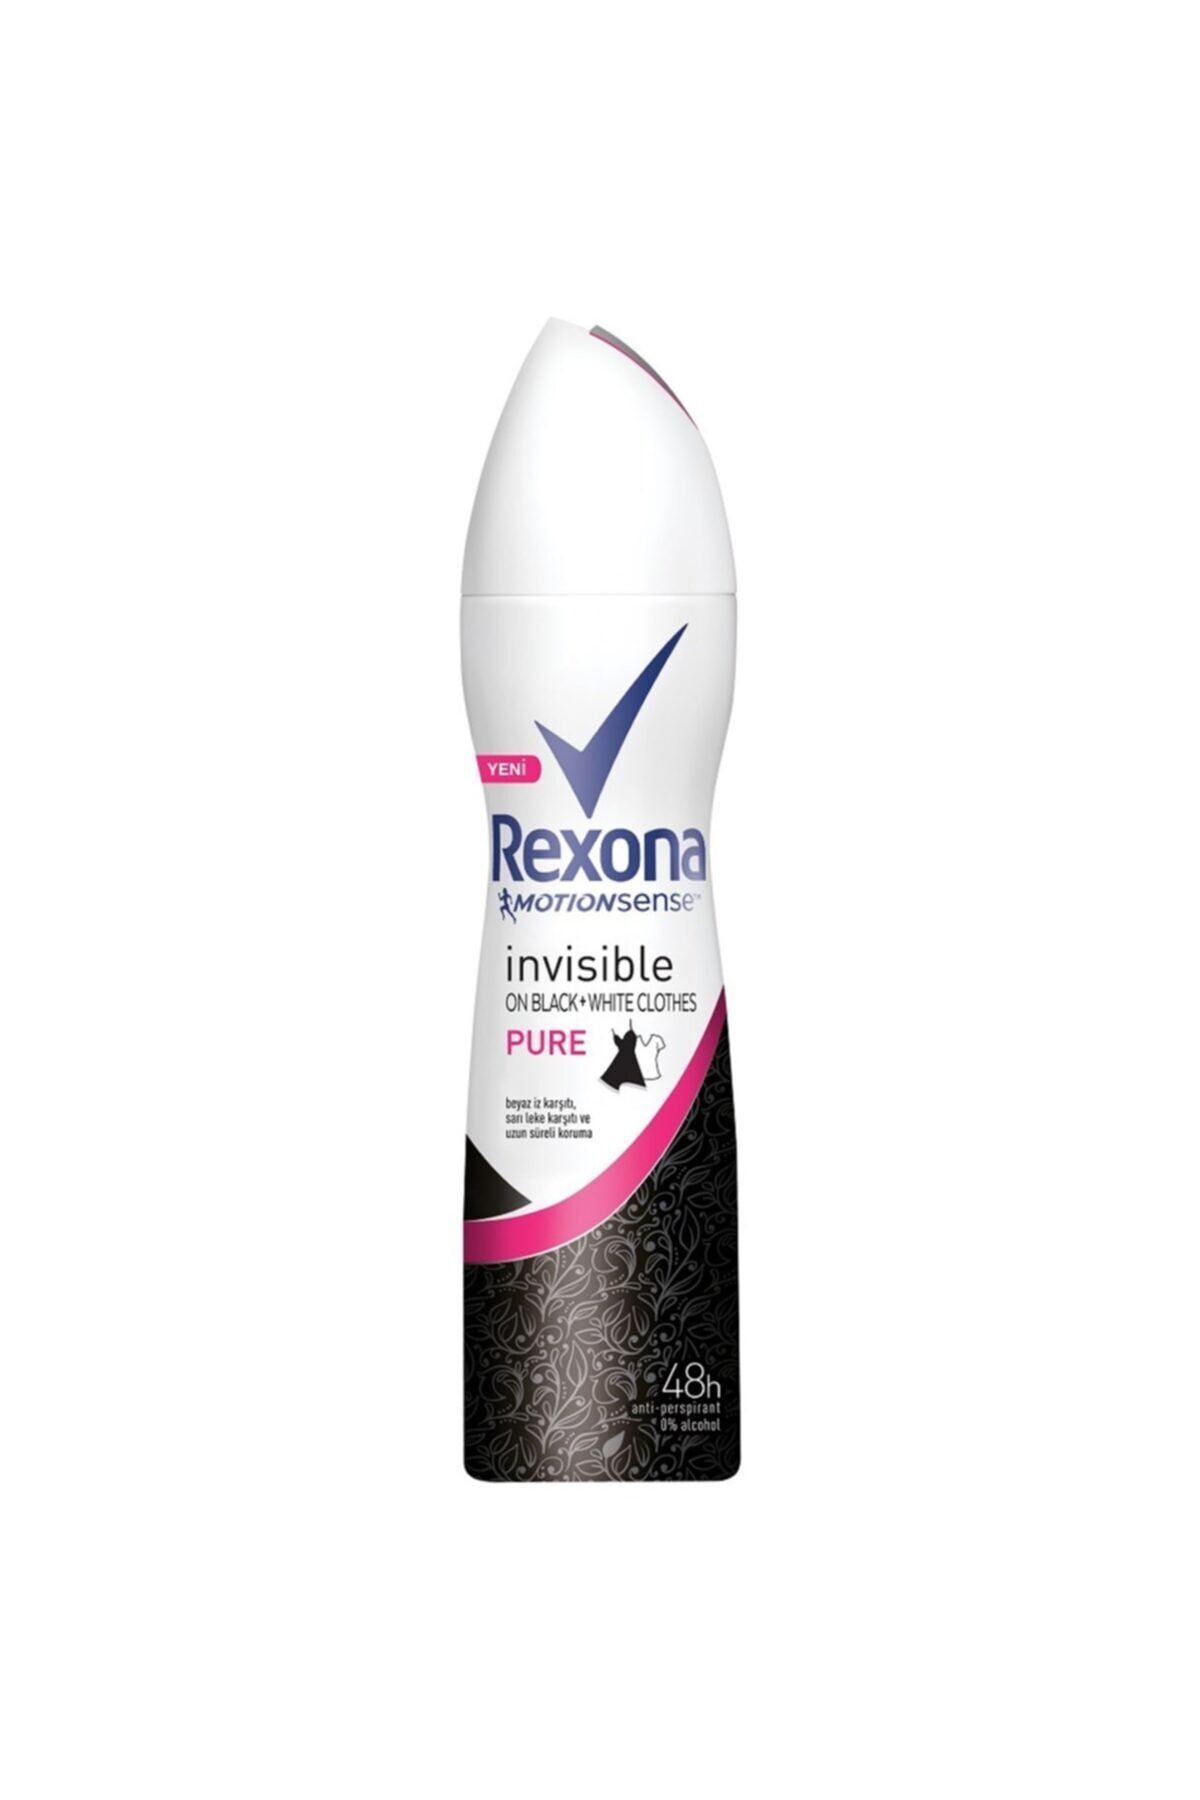 Rexona Invisible Pure Black & White Kadın Deodorant Sprey 150 ml